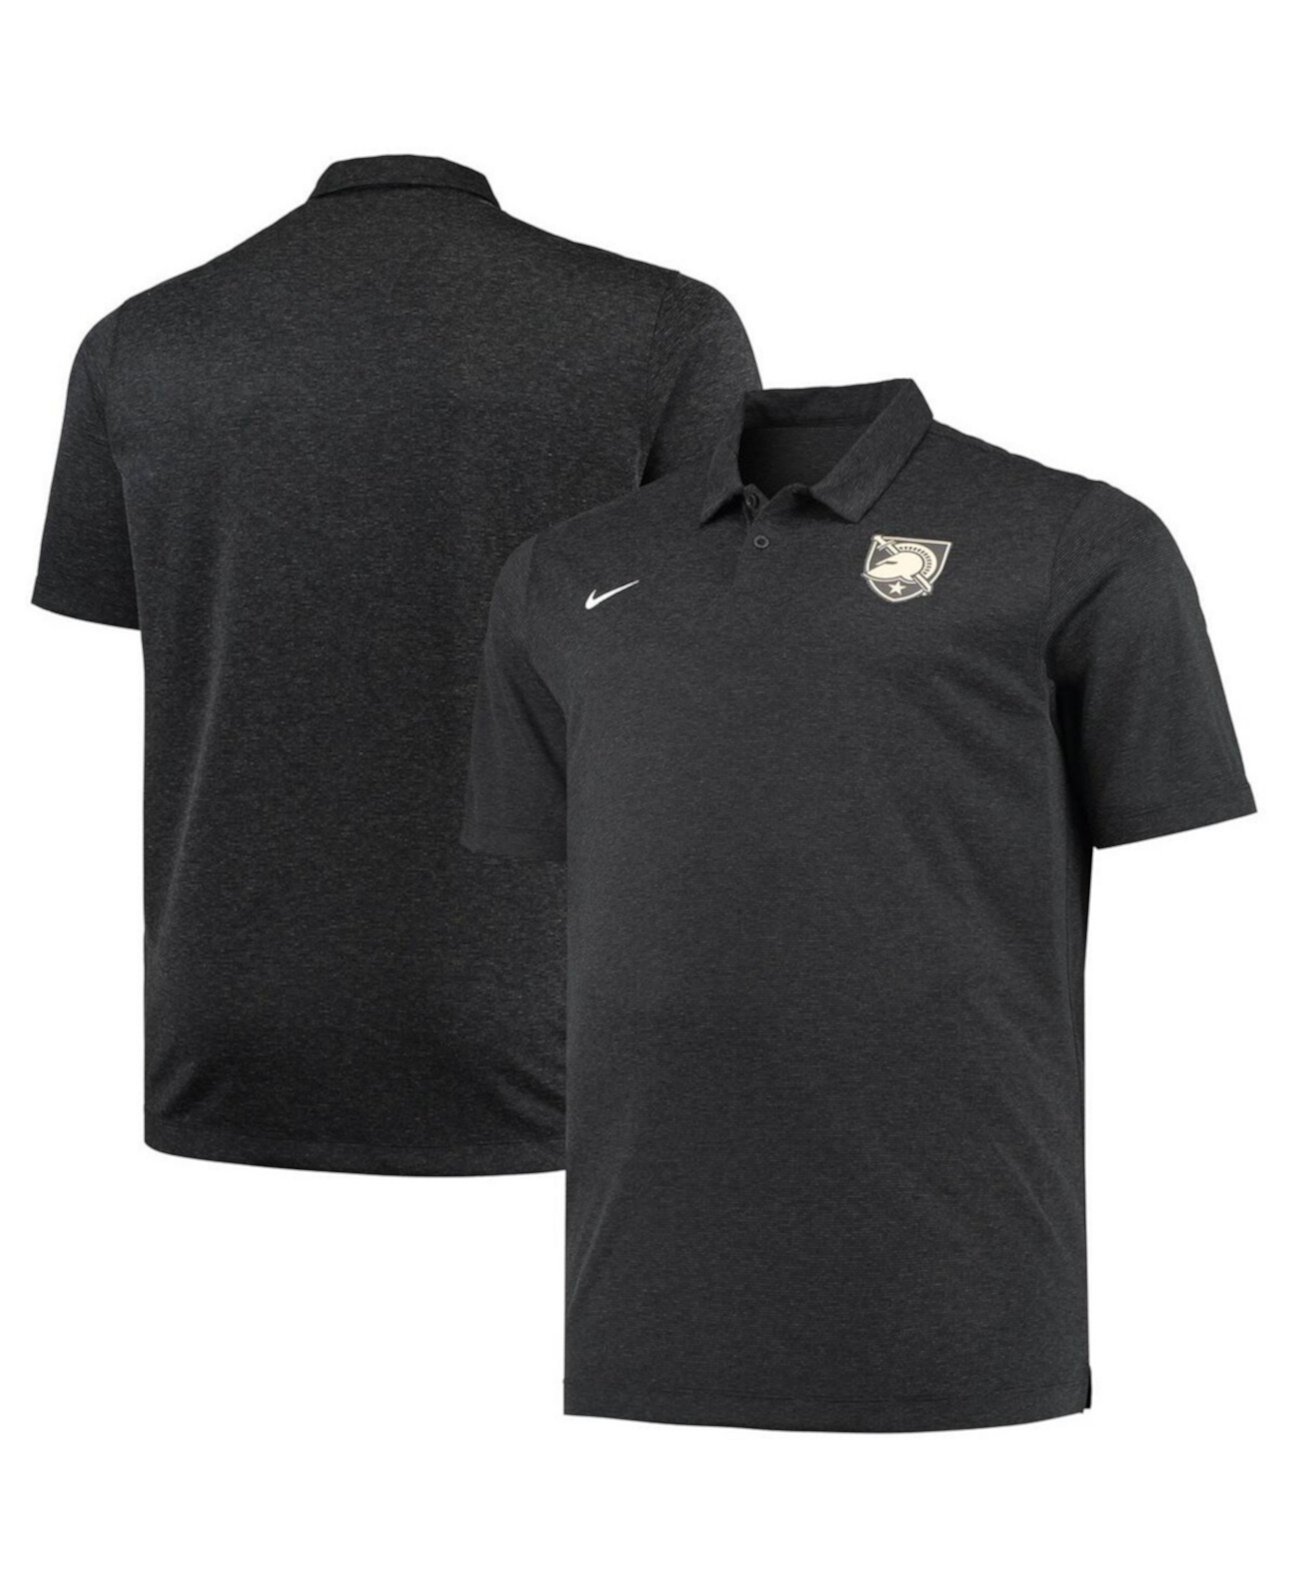 Мужская рубашка поло с меланжевым покрытием черного цвета Army Black Knights Big and Tall Performance Nike